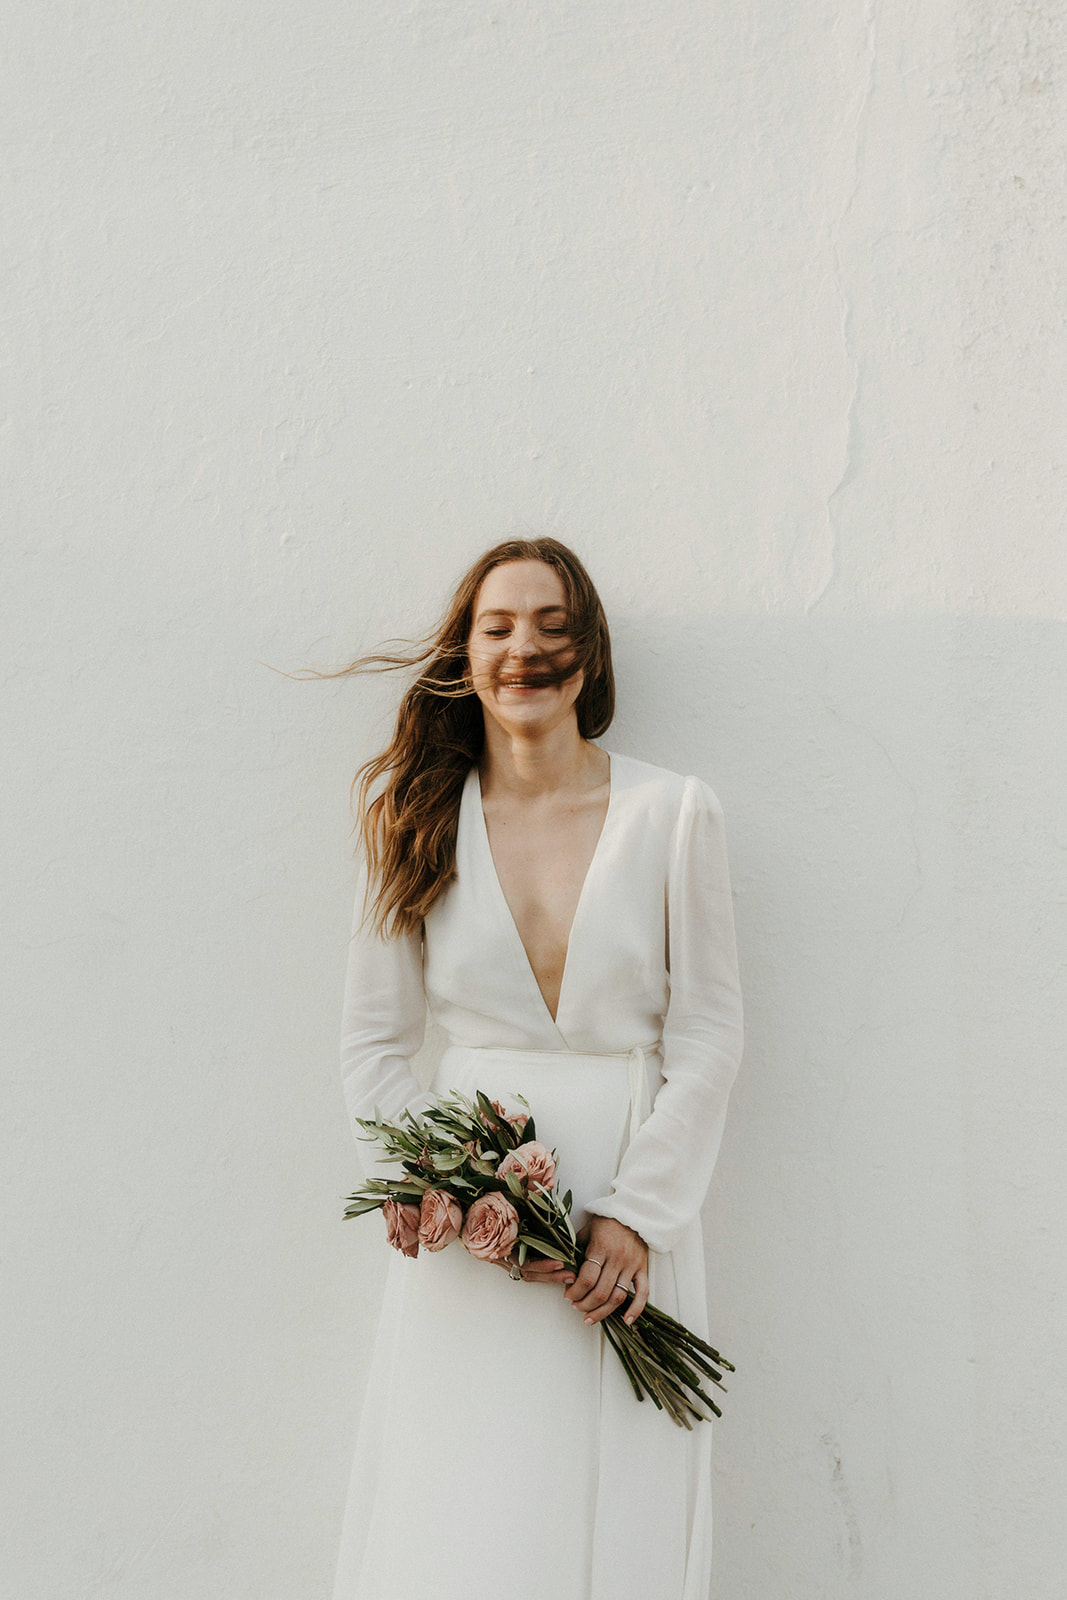 windy portrait of a bride holding her bouquet